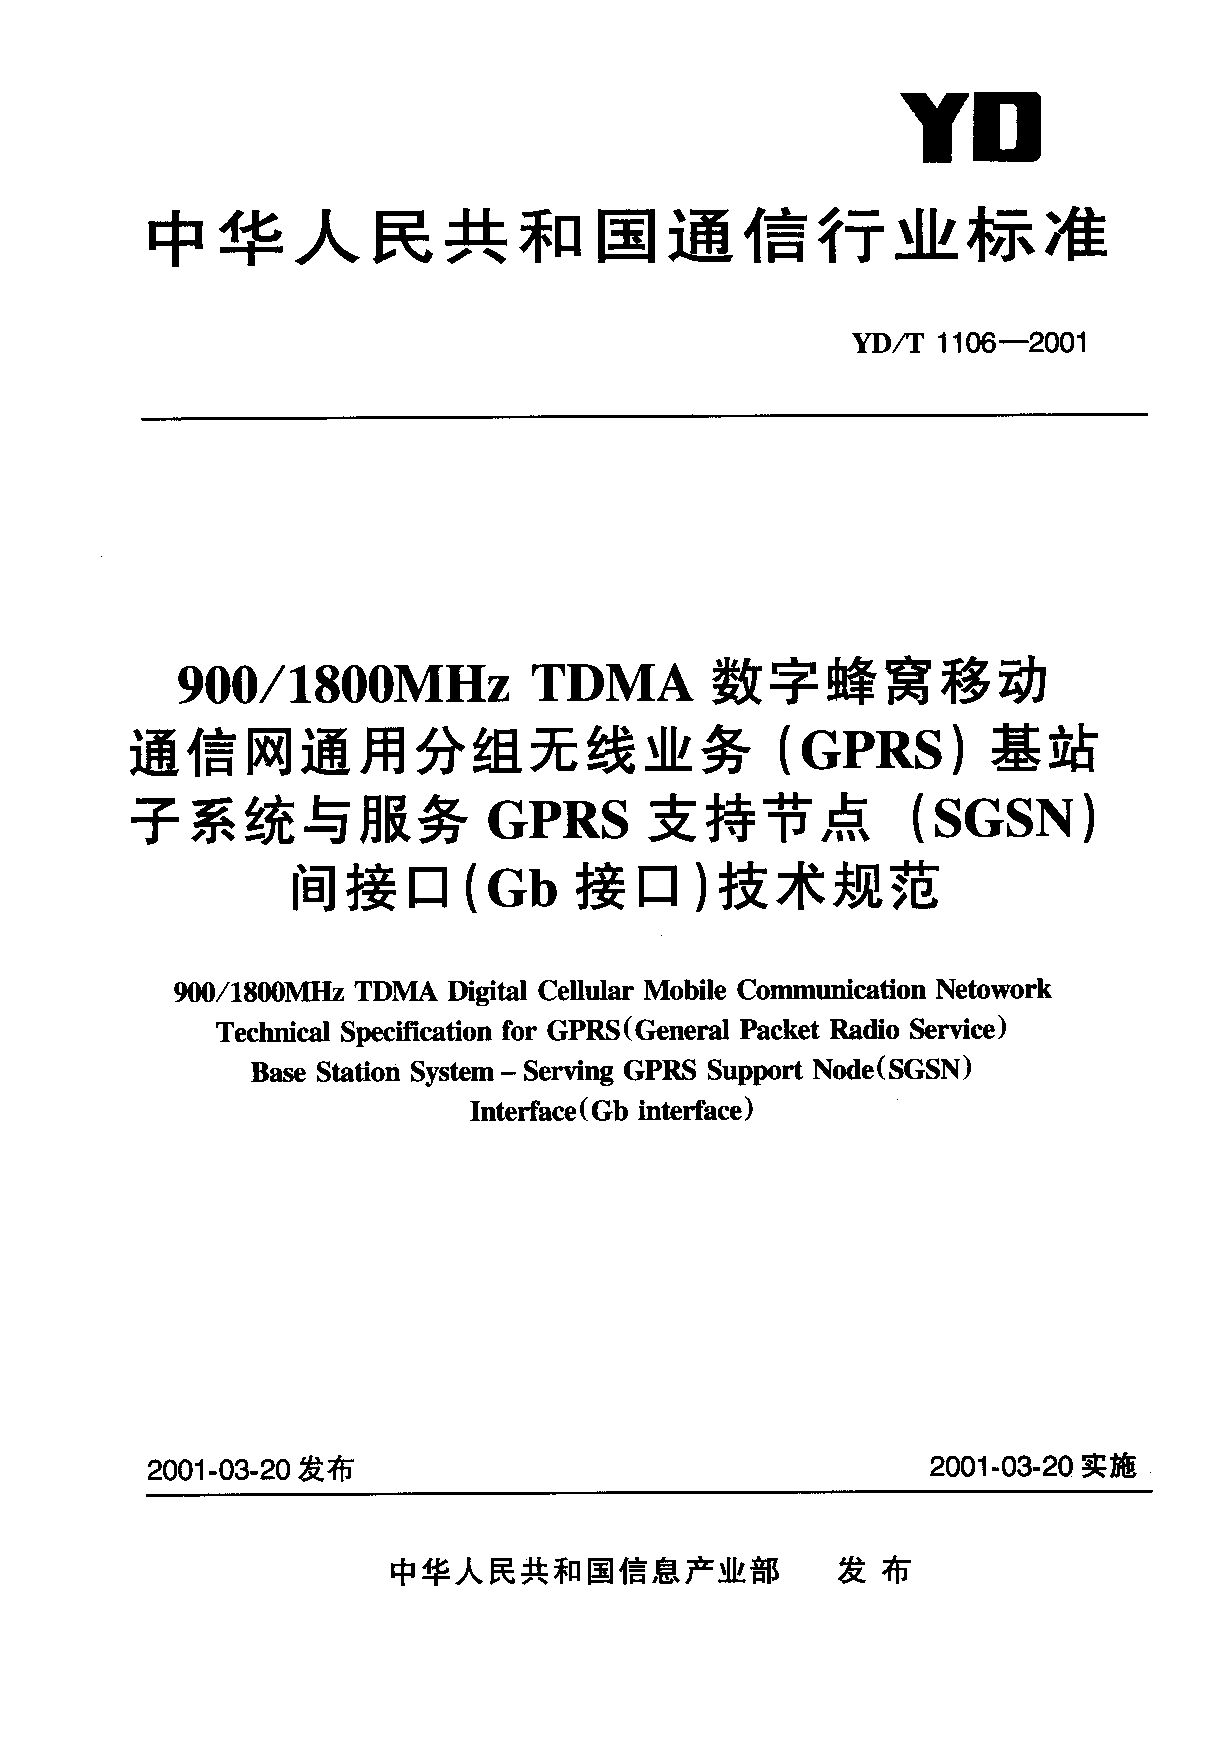 YD/T 1106-2001封面图